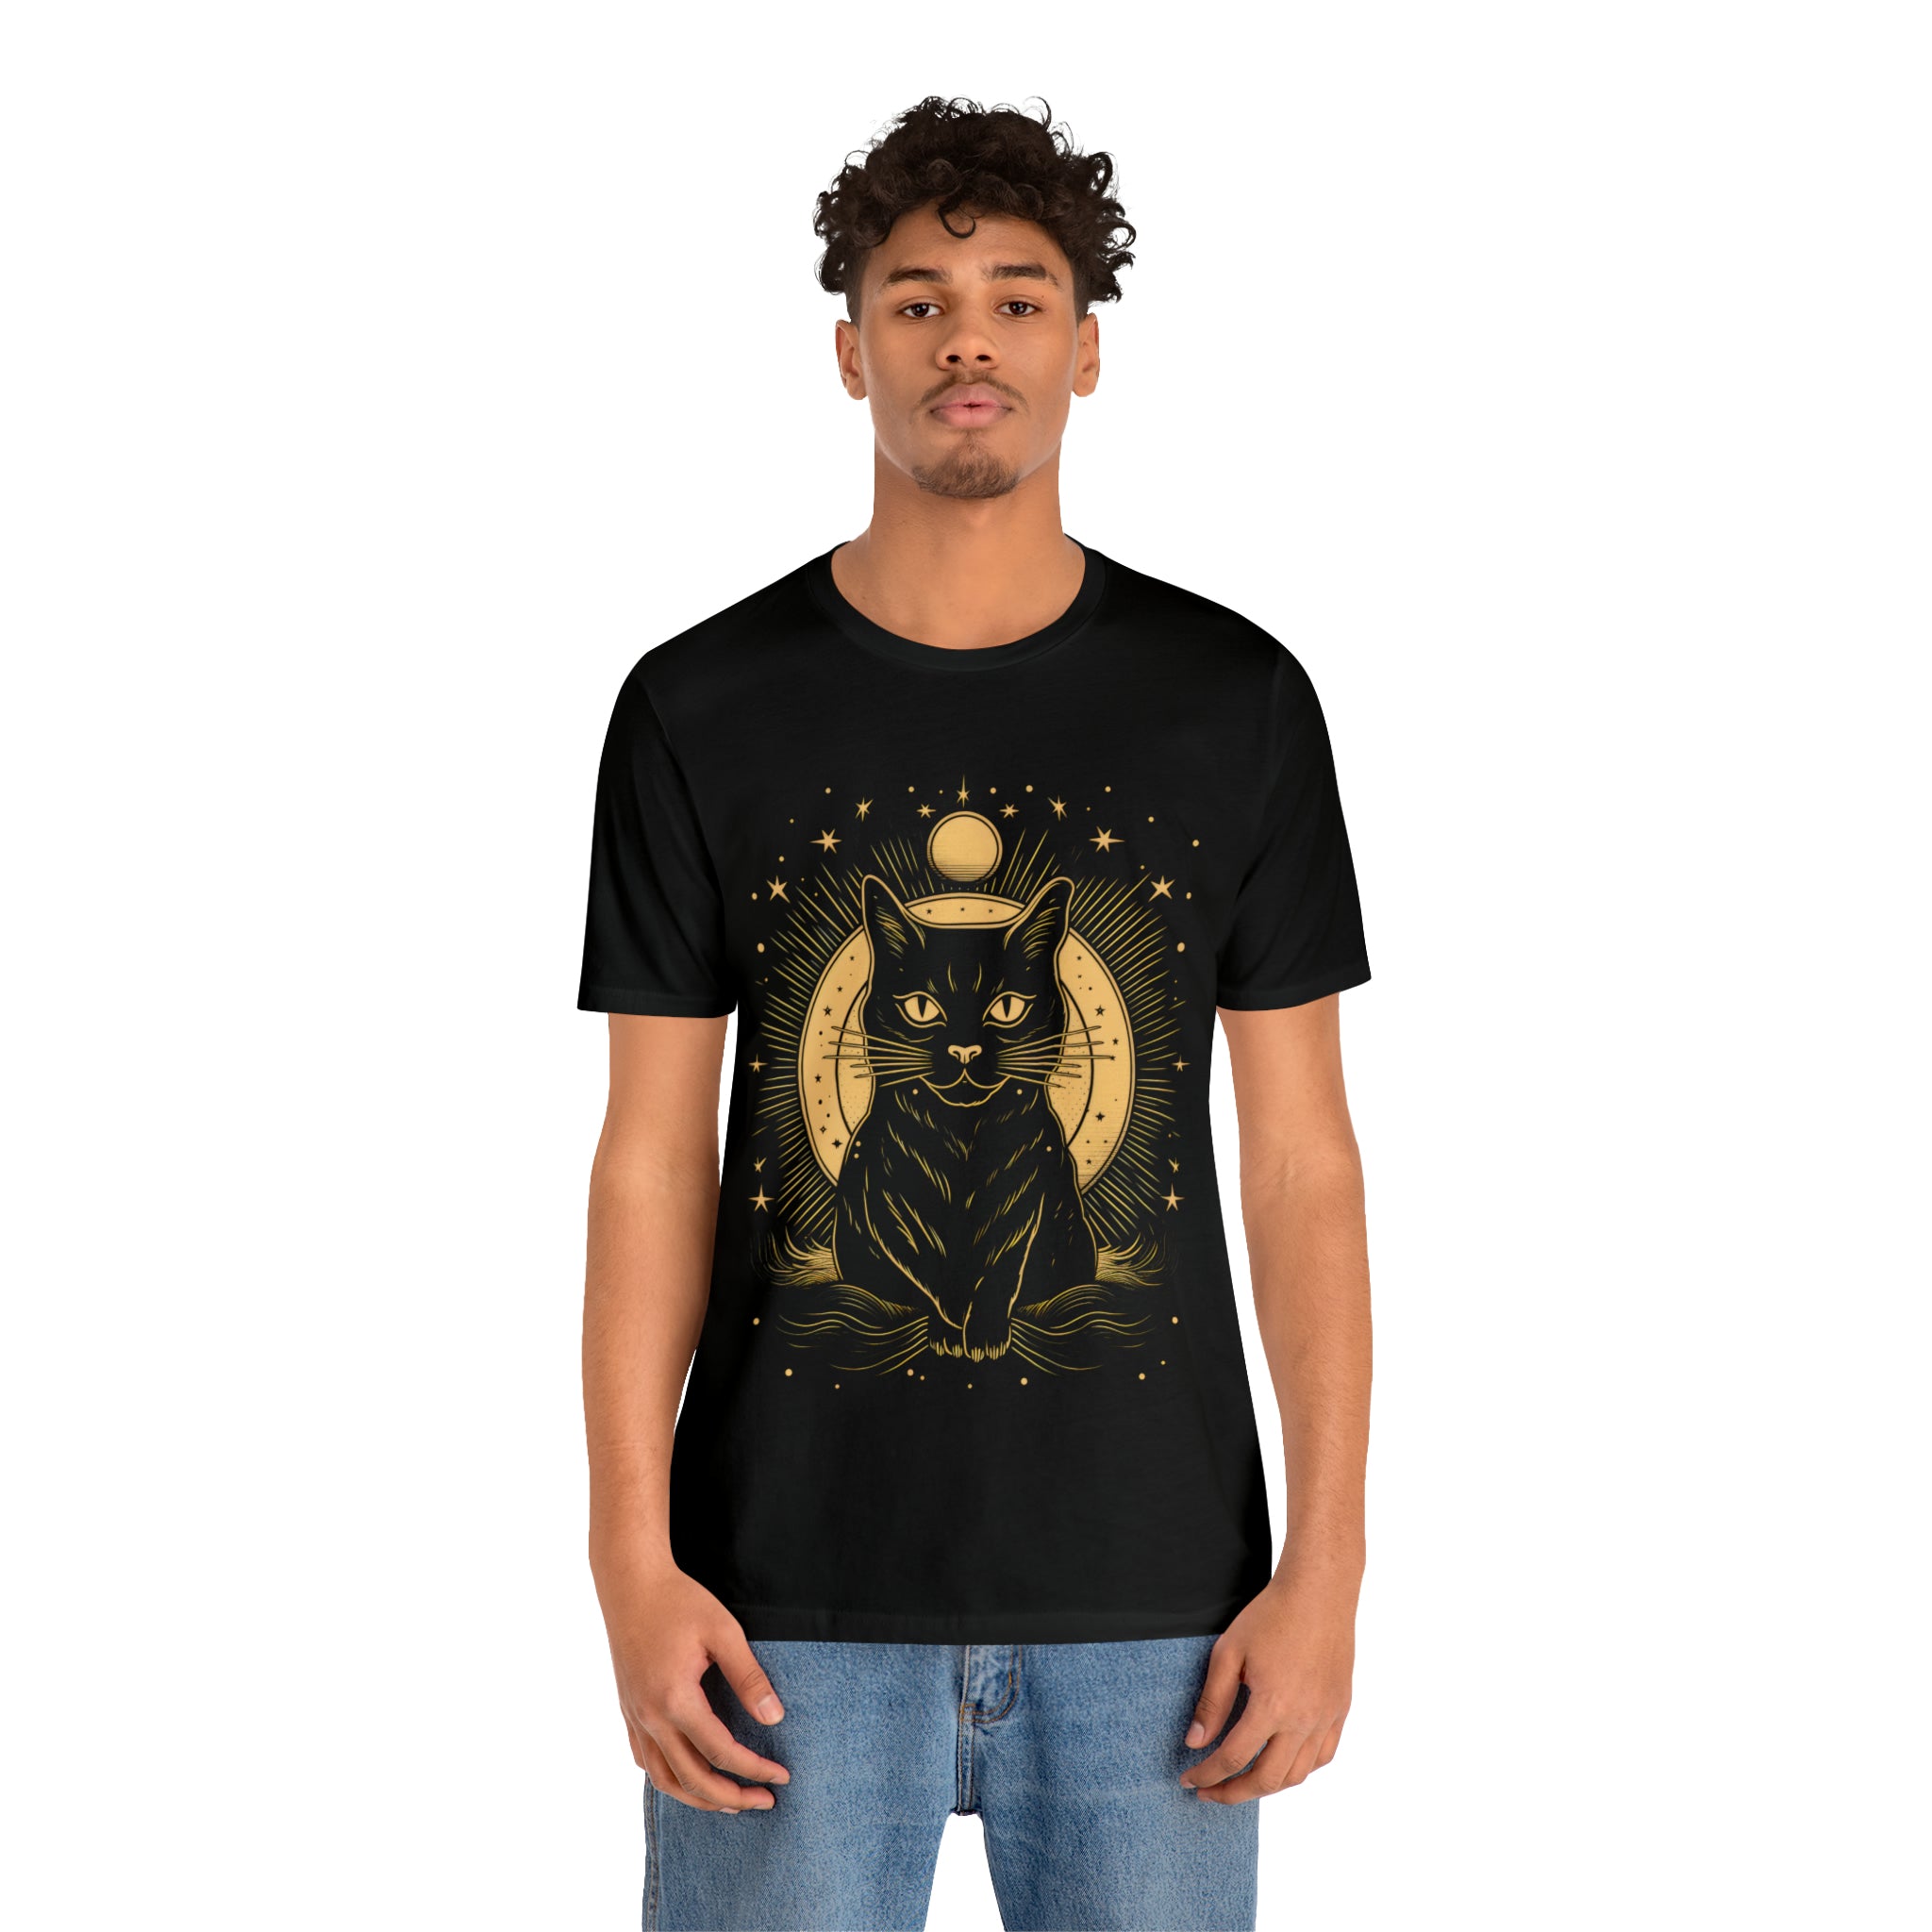 Cosmic kitty cat t-shirt man